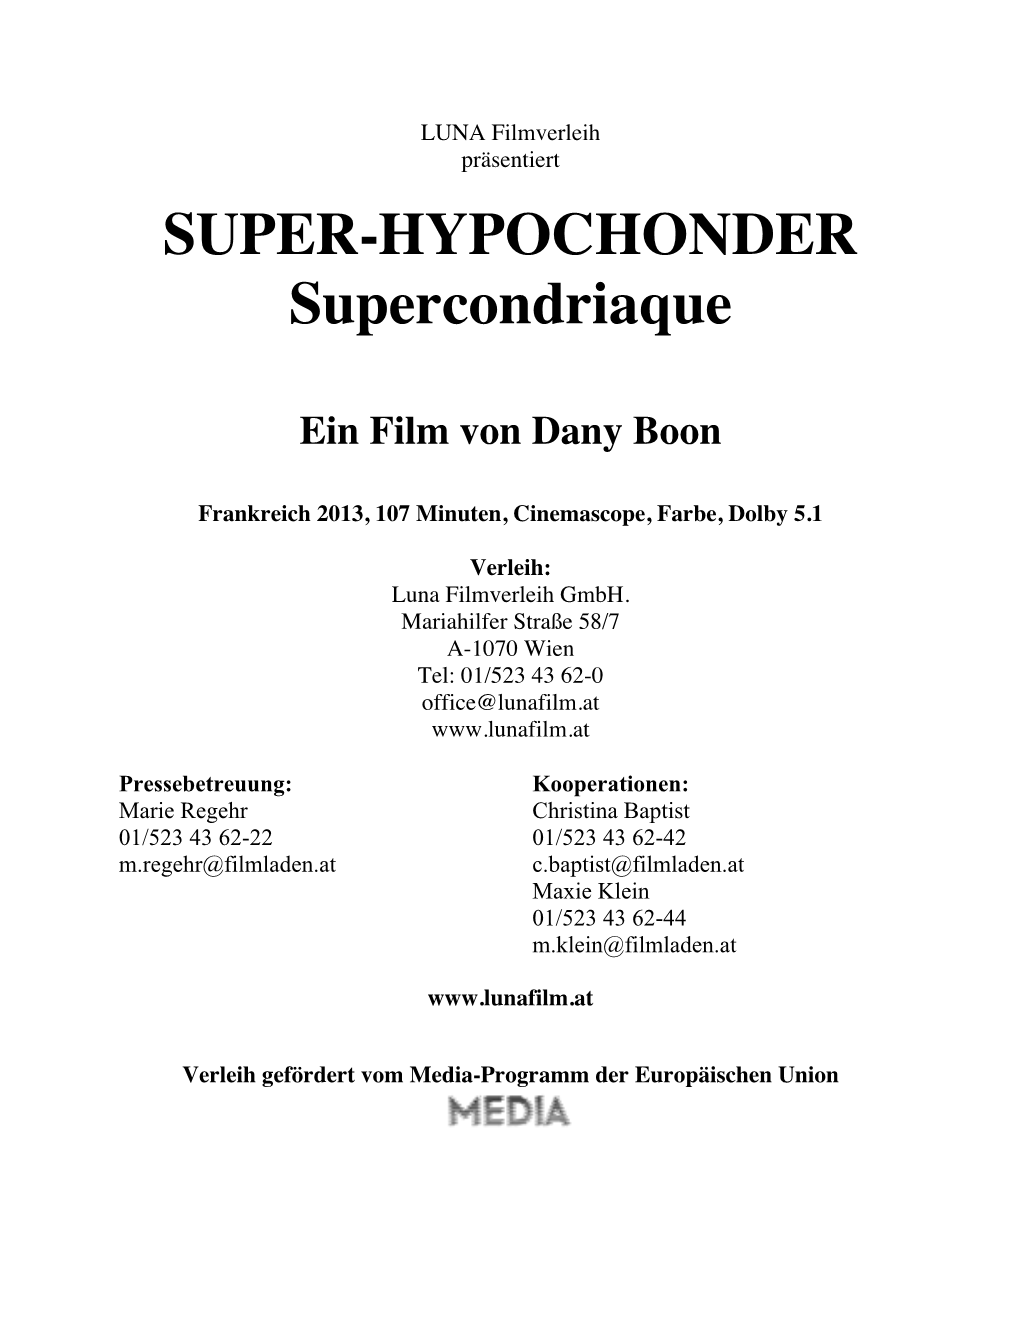 SUPER-HYPOCHONDER Supercondriaque